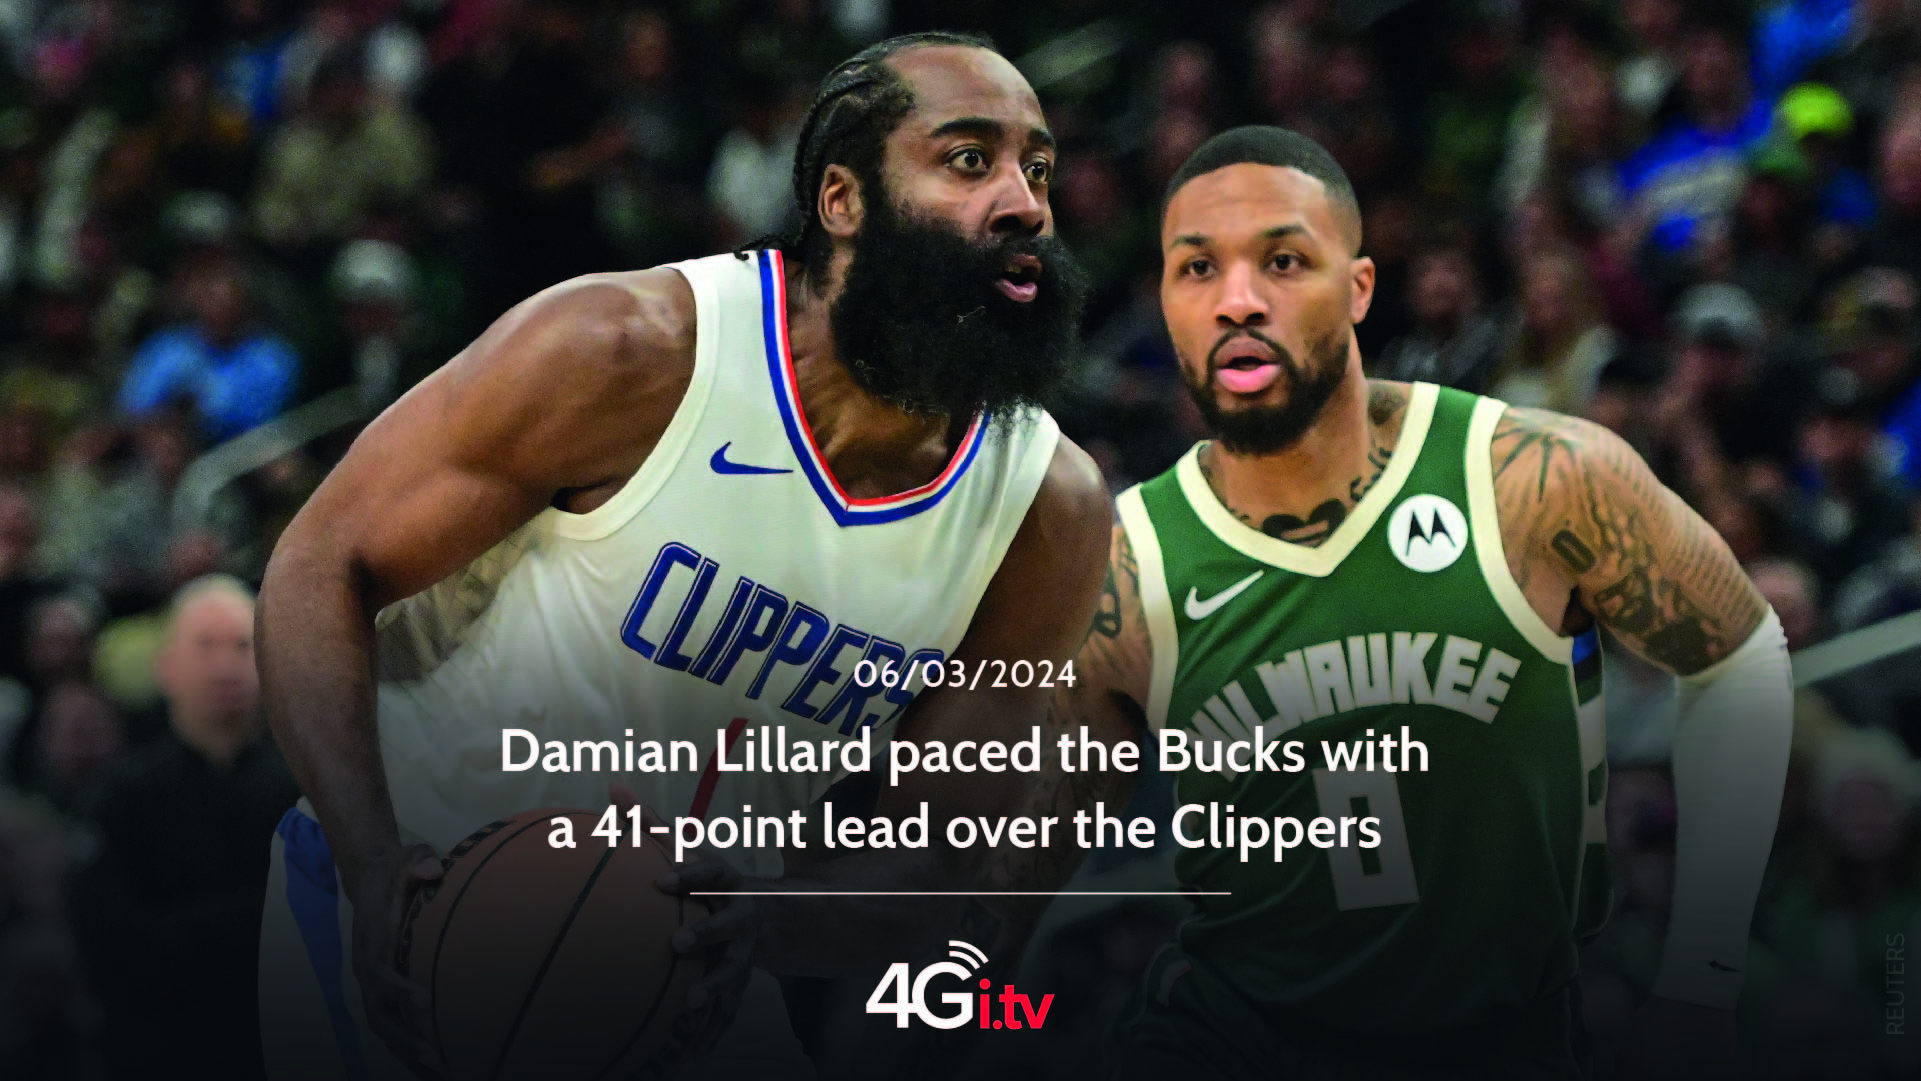 Lee más sobre el artículo Damian Lillard paced the Bucks with a 41-point lead over the Clippers